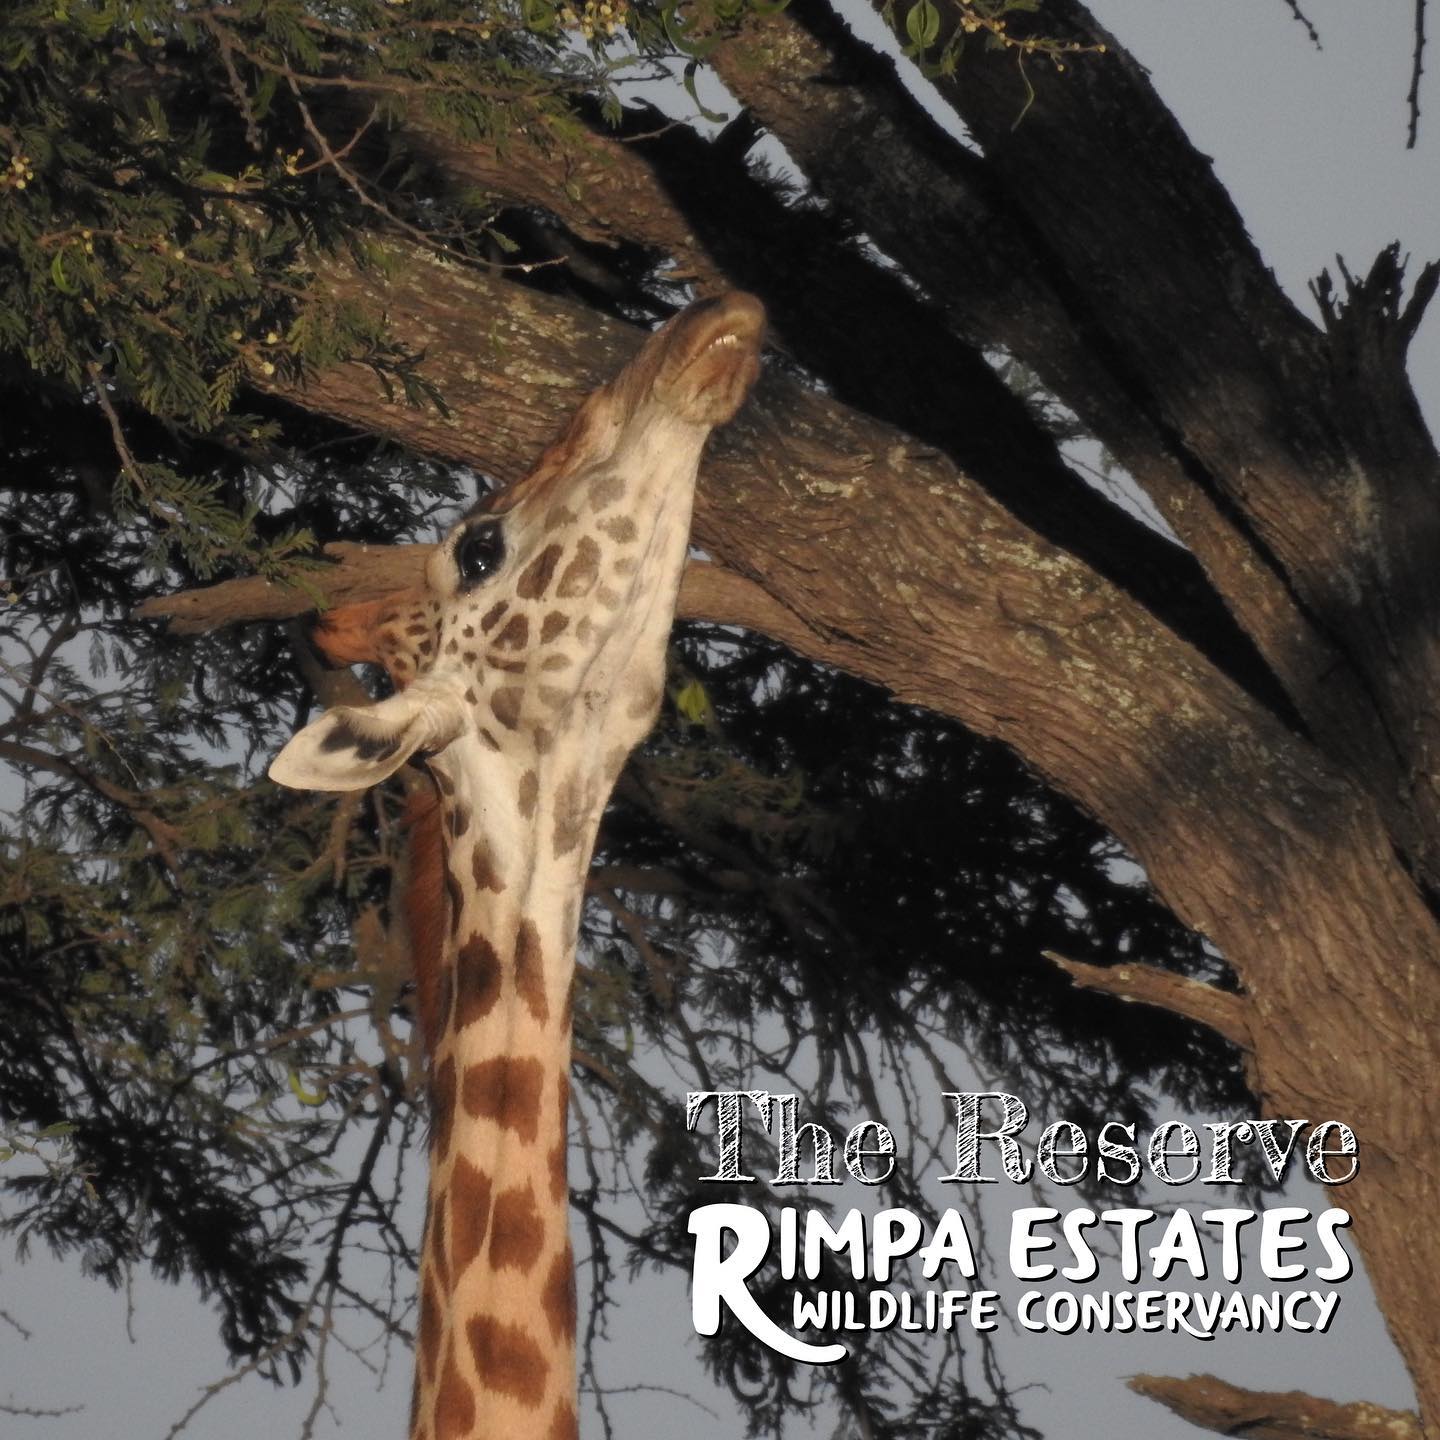 Happy World Giraffe Day from our happy giraffes to you!

#worldgiraffeday #giraffes #kenya #kenyawildlife